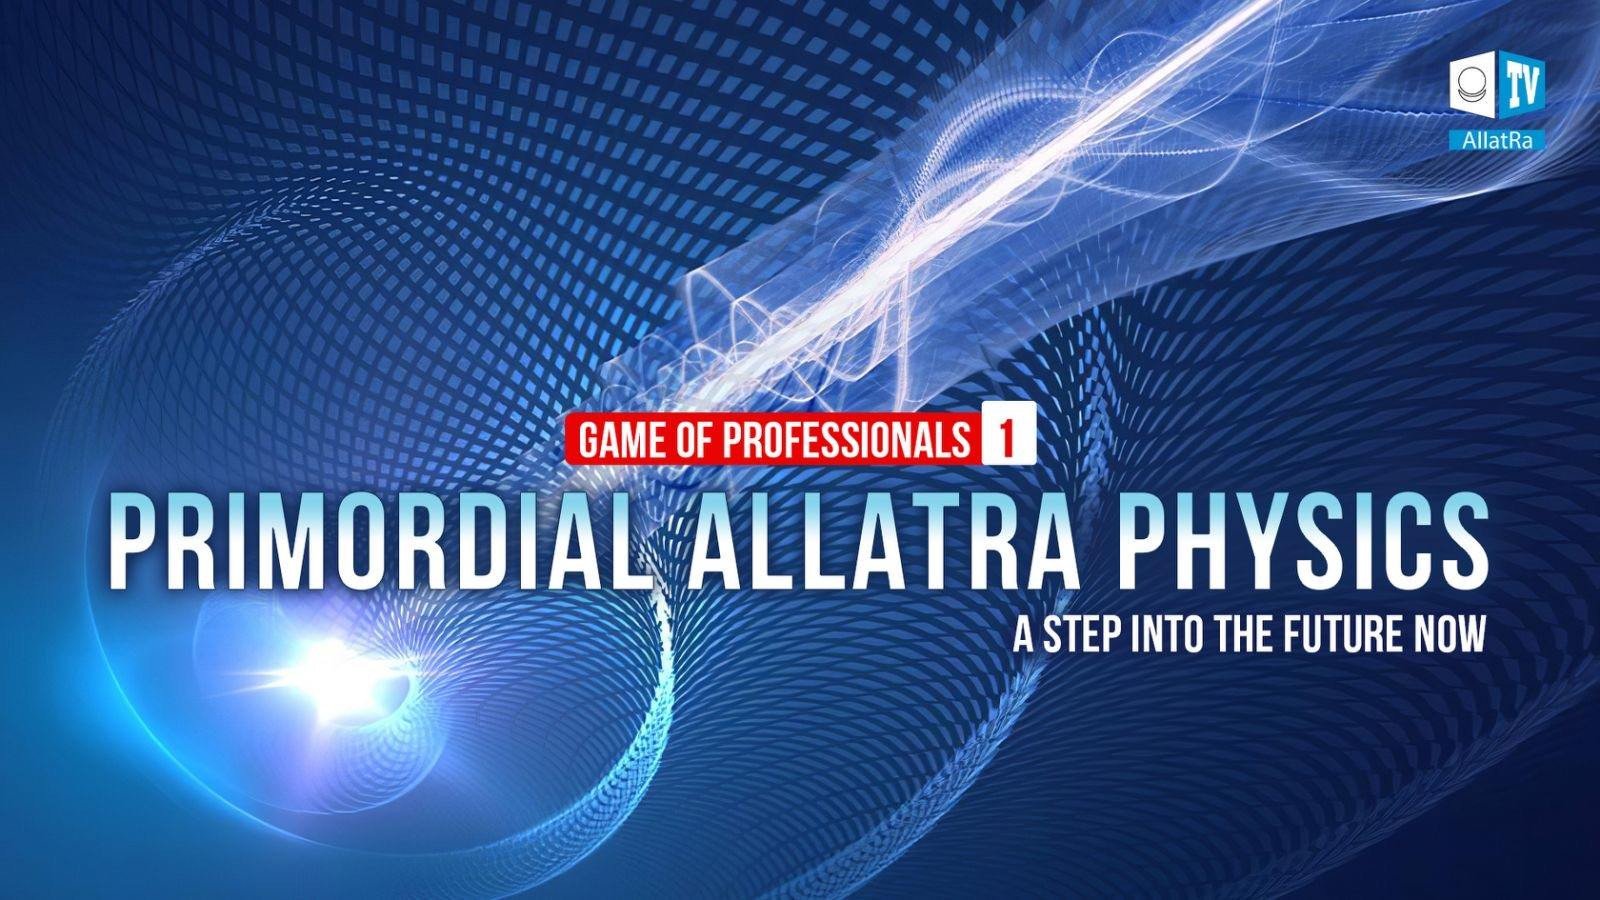 Game of Professionals. PRIMORDIAL ALLATRA PHYSICS, November 30, 2019